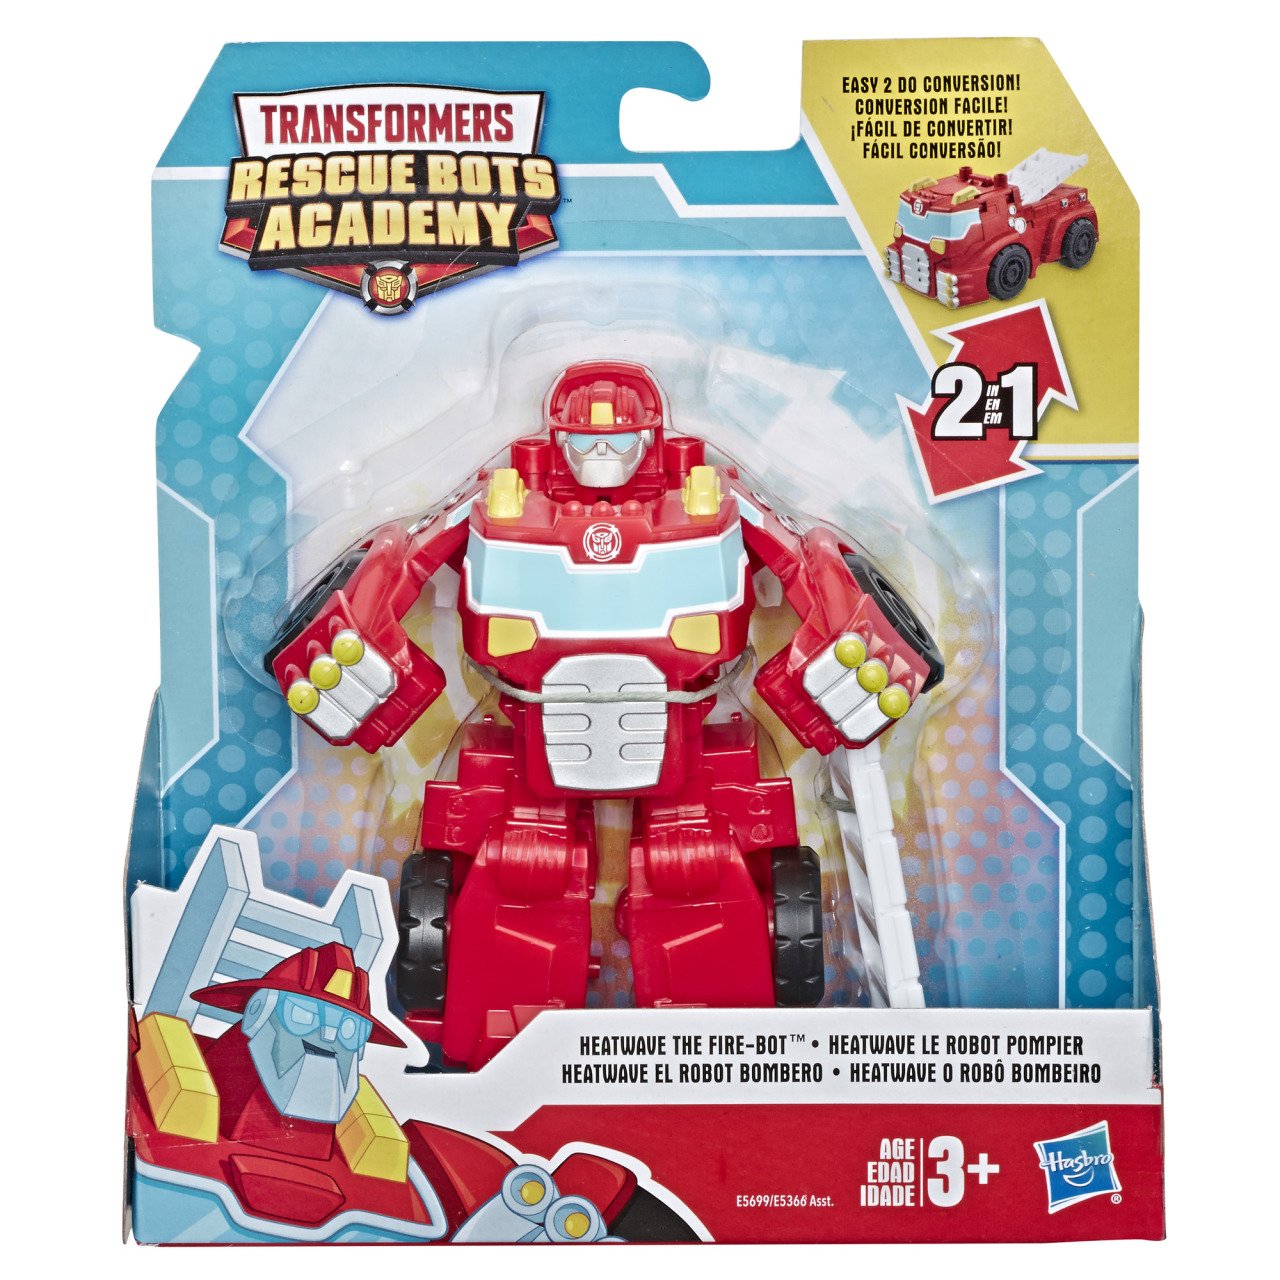 Transformers Rescue Bots Academy İtfaiye-Robot Heatwave Figür